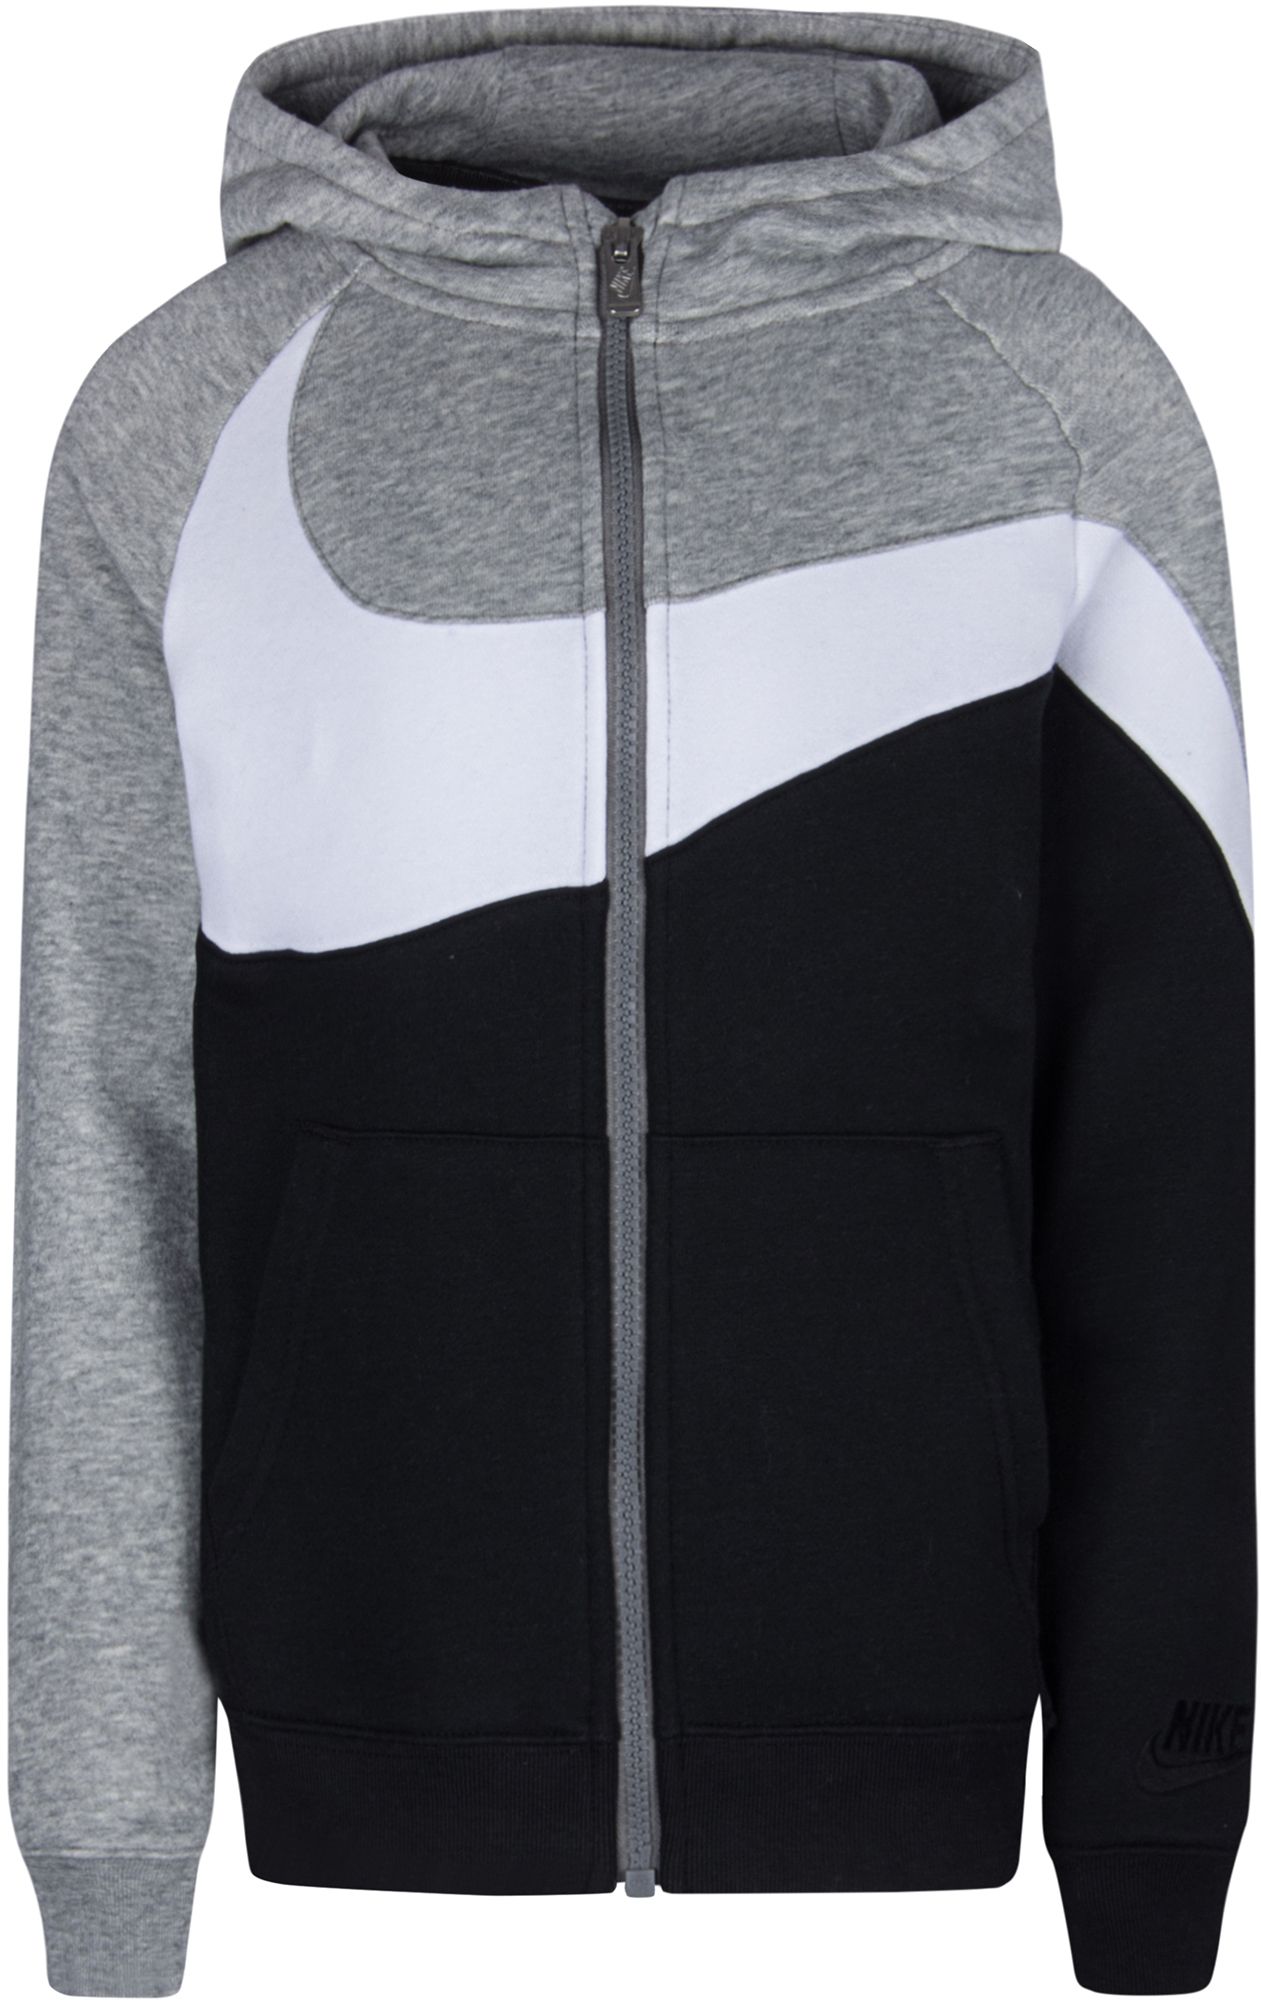 nike grey black and white hoodie